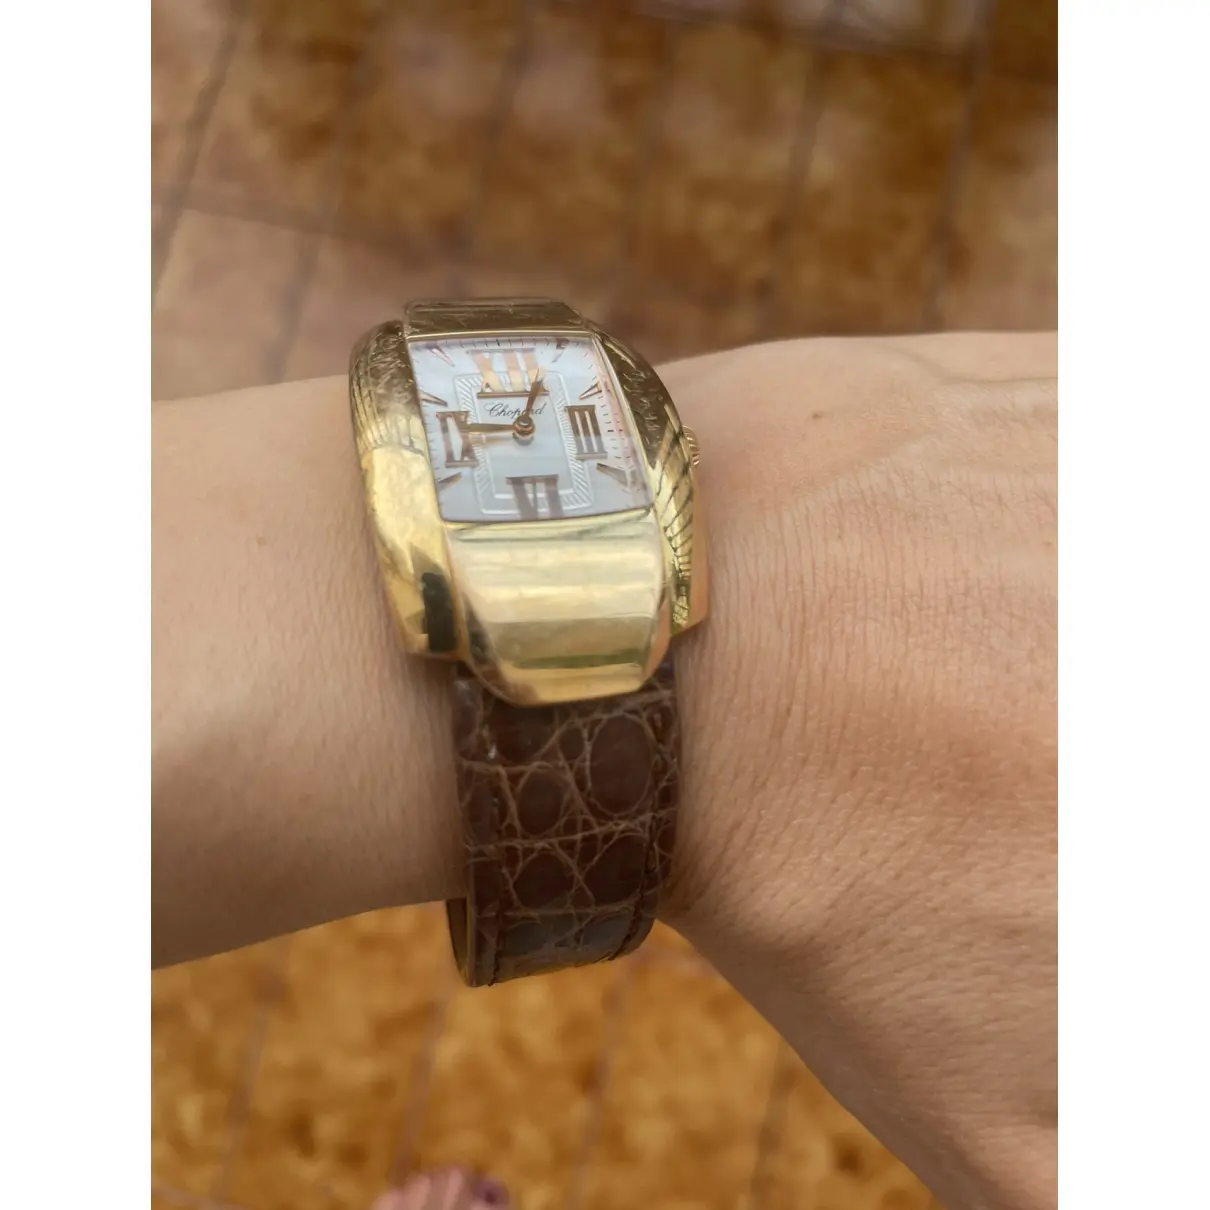 Buy Chopard La Strada yellow gold watch online